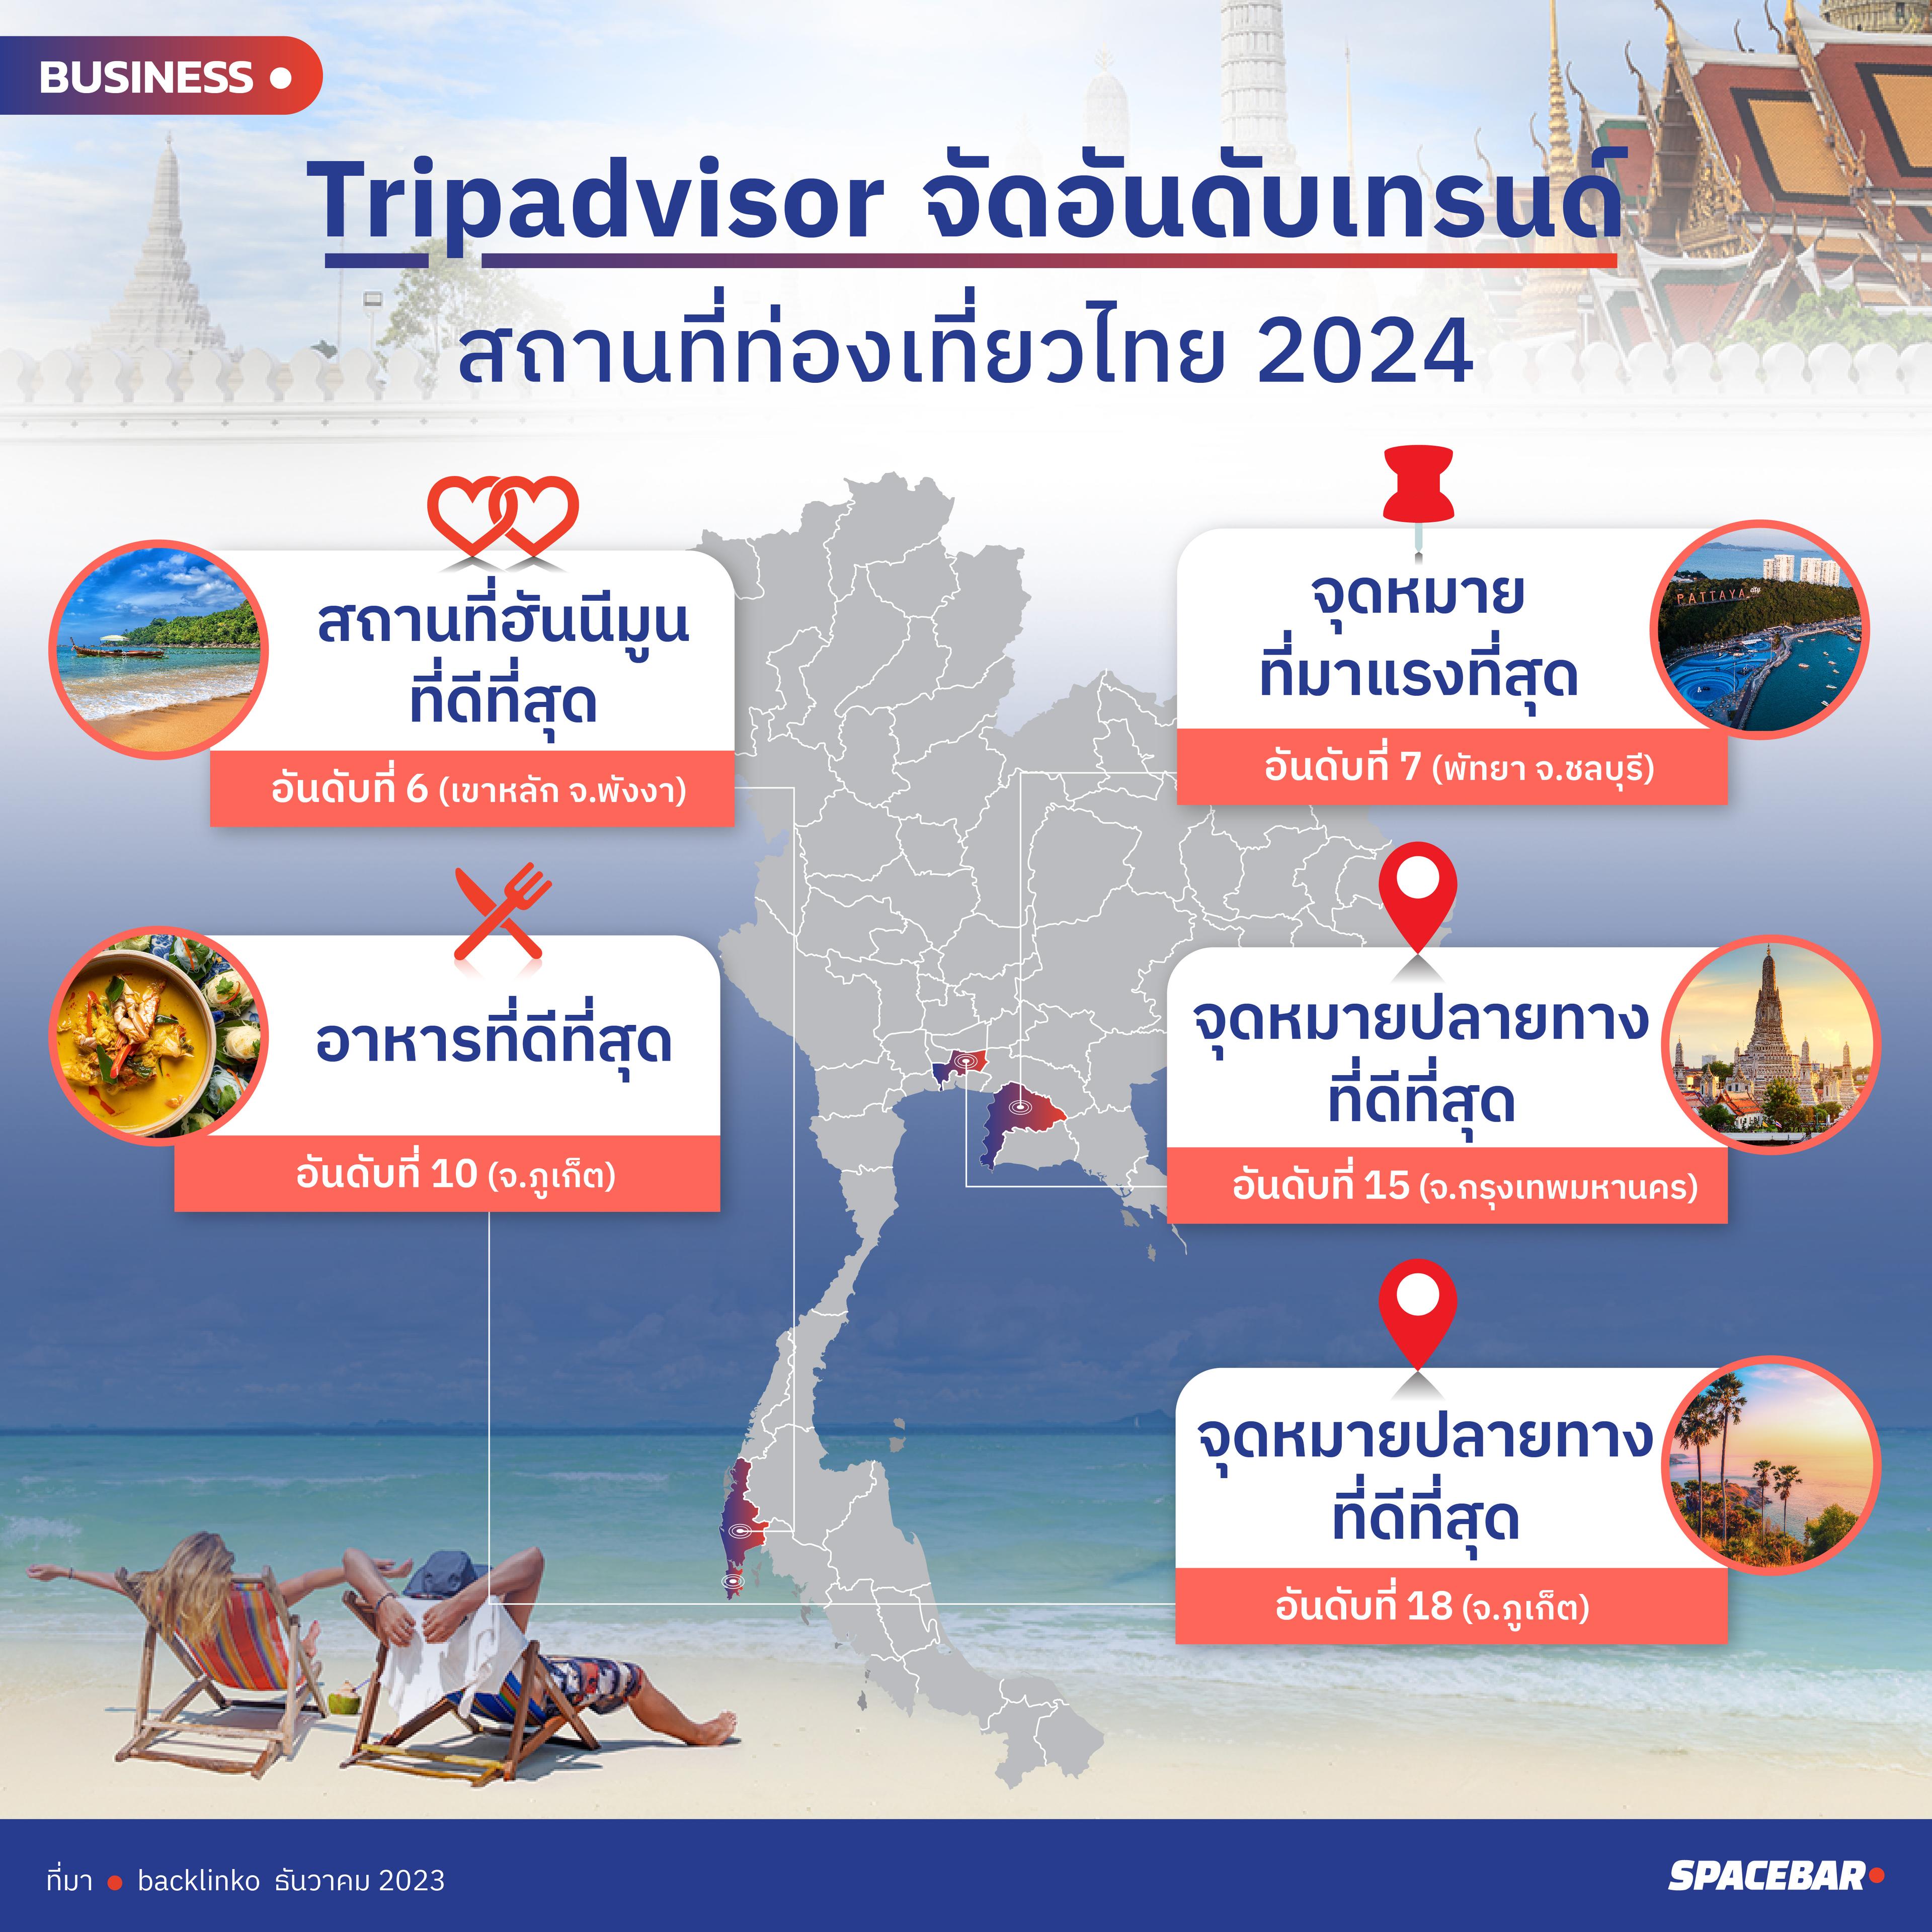 INFO-economy-tripadvisor-thai-food-travel-honeymoon-01.jpg